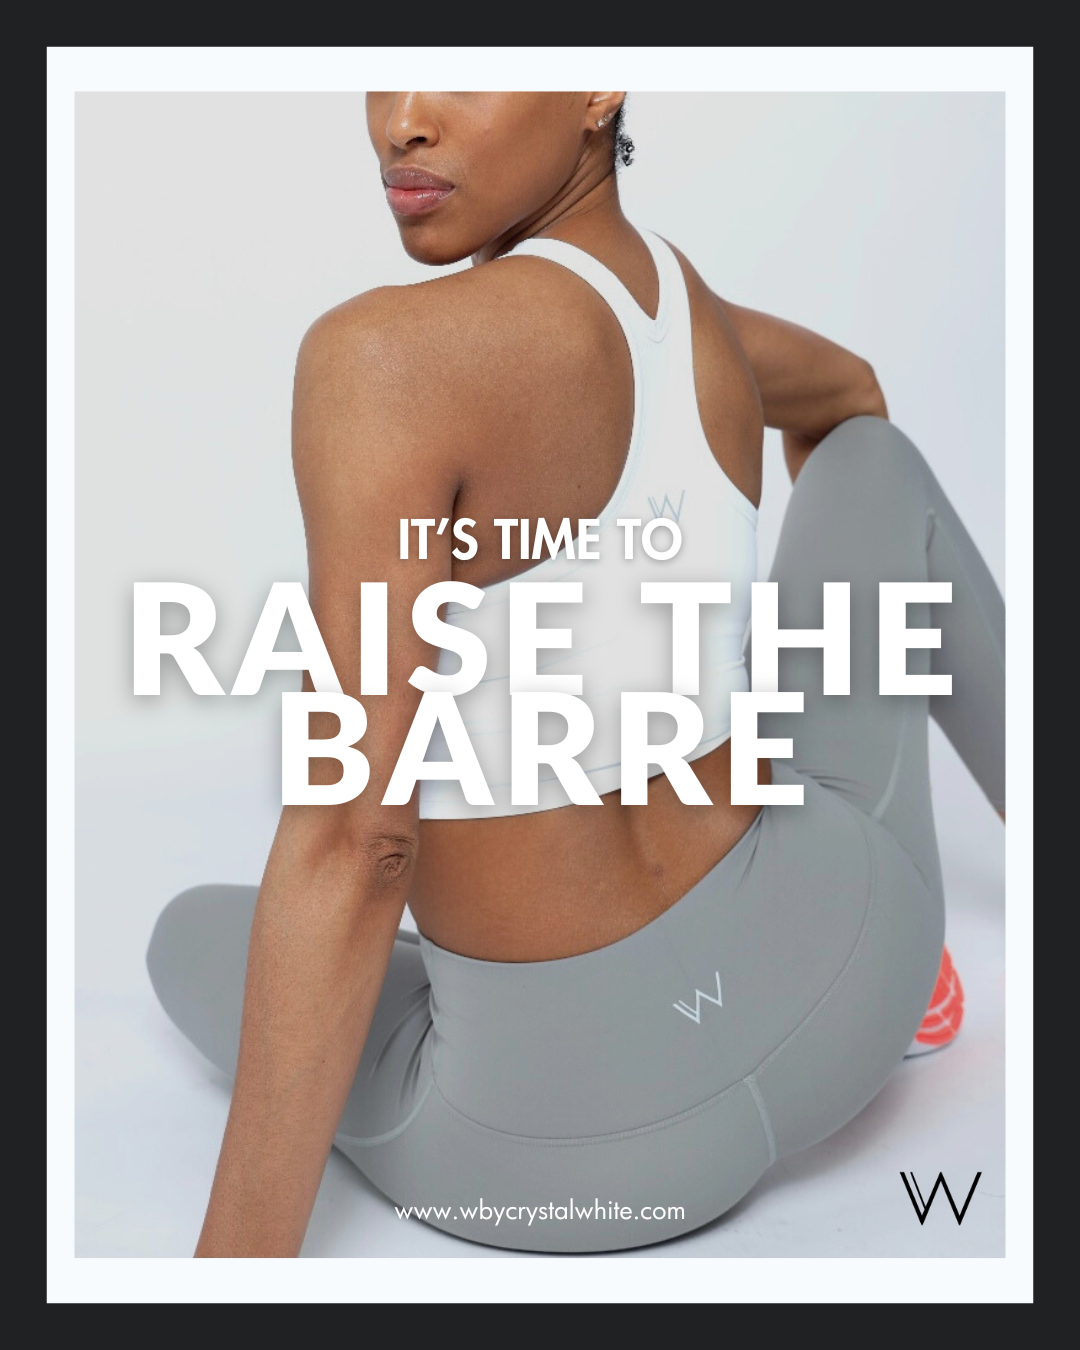 Raise the Barre